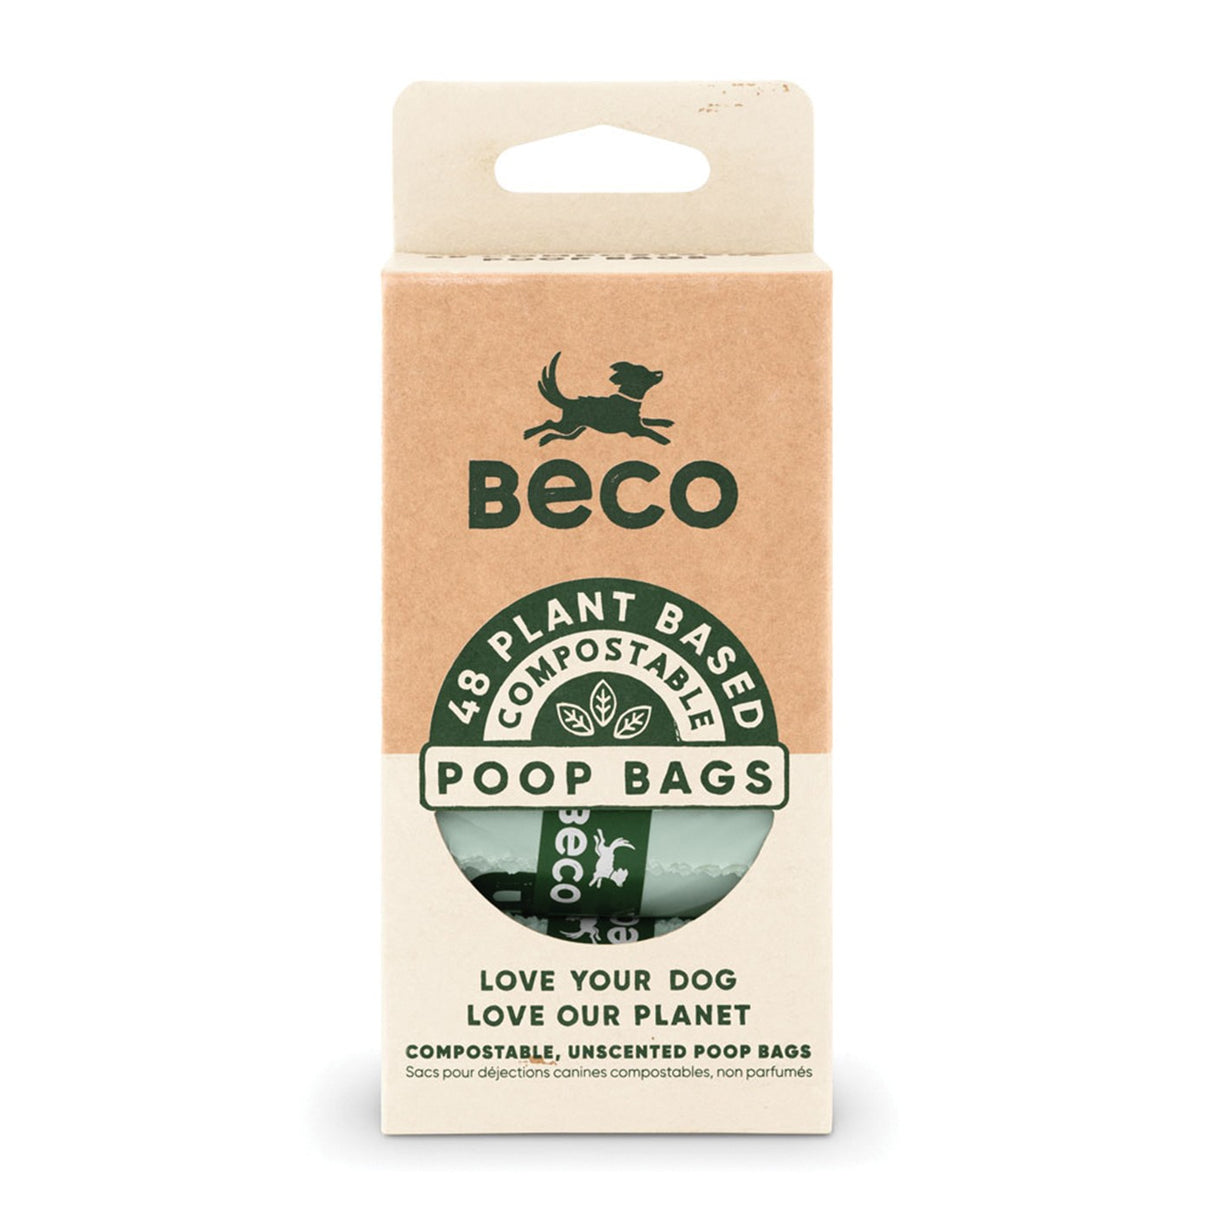 Beco Sacs à crottes compostables non parfumés - Paquet de 48